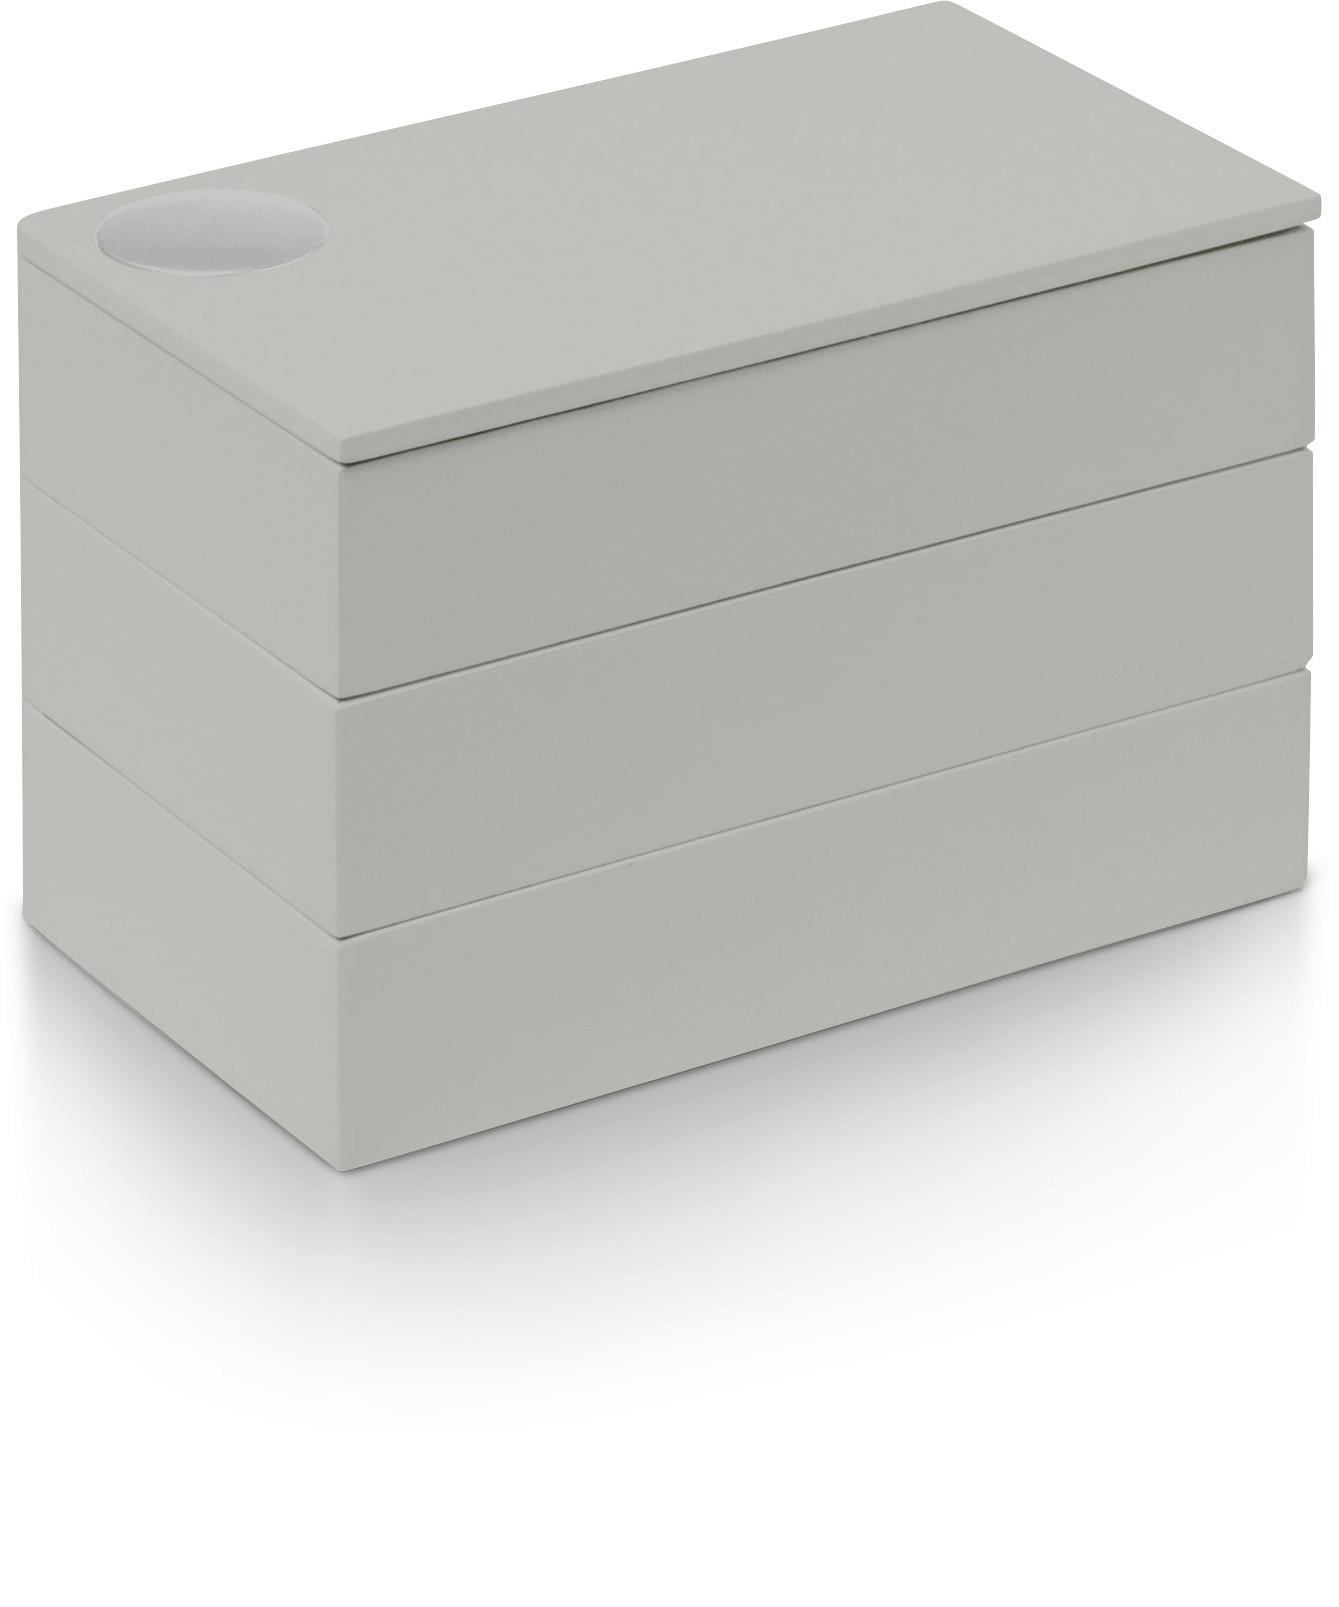 Schmuckbox Joris in Grau - Grau, Modern, Holzwerkstoff (19,1/11,8/12,7cm) - Modern Living